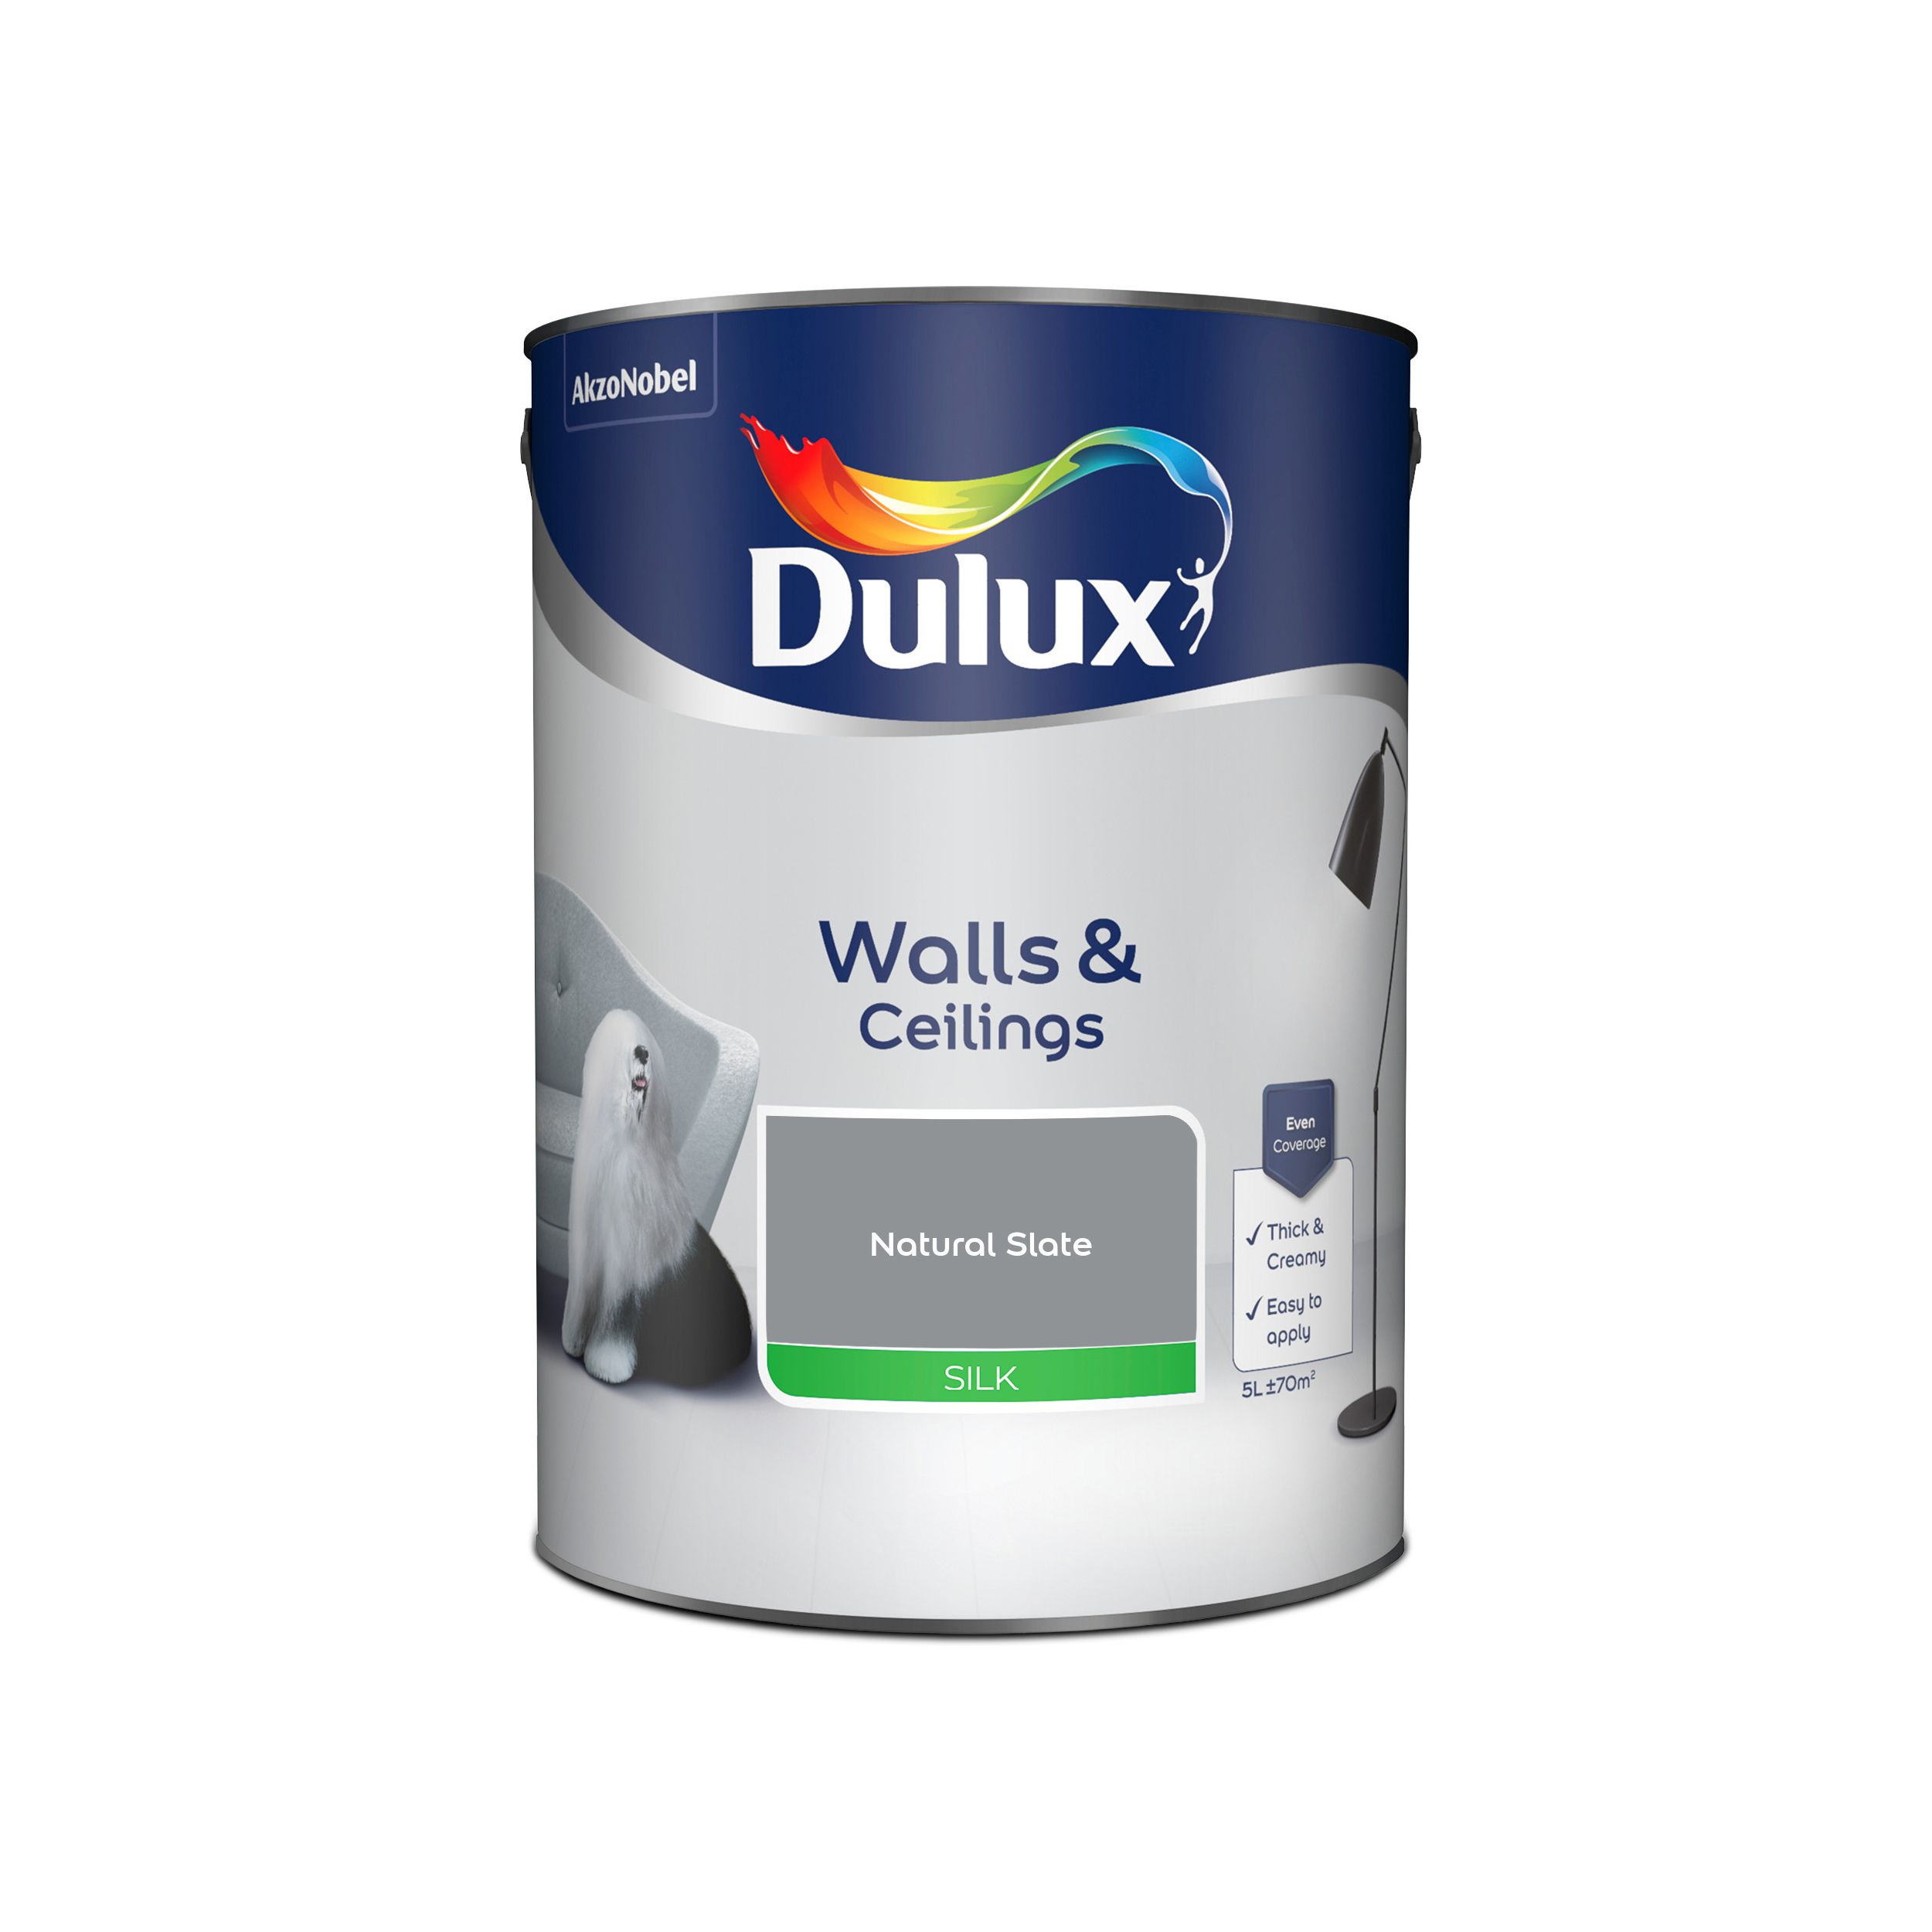 Dulux Walls & ceilings Natural slate Silk Emulsion paint, 5L